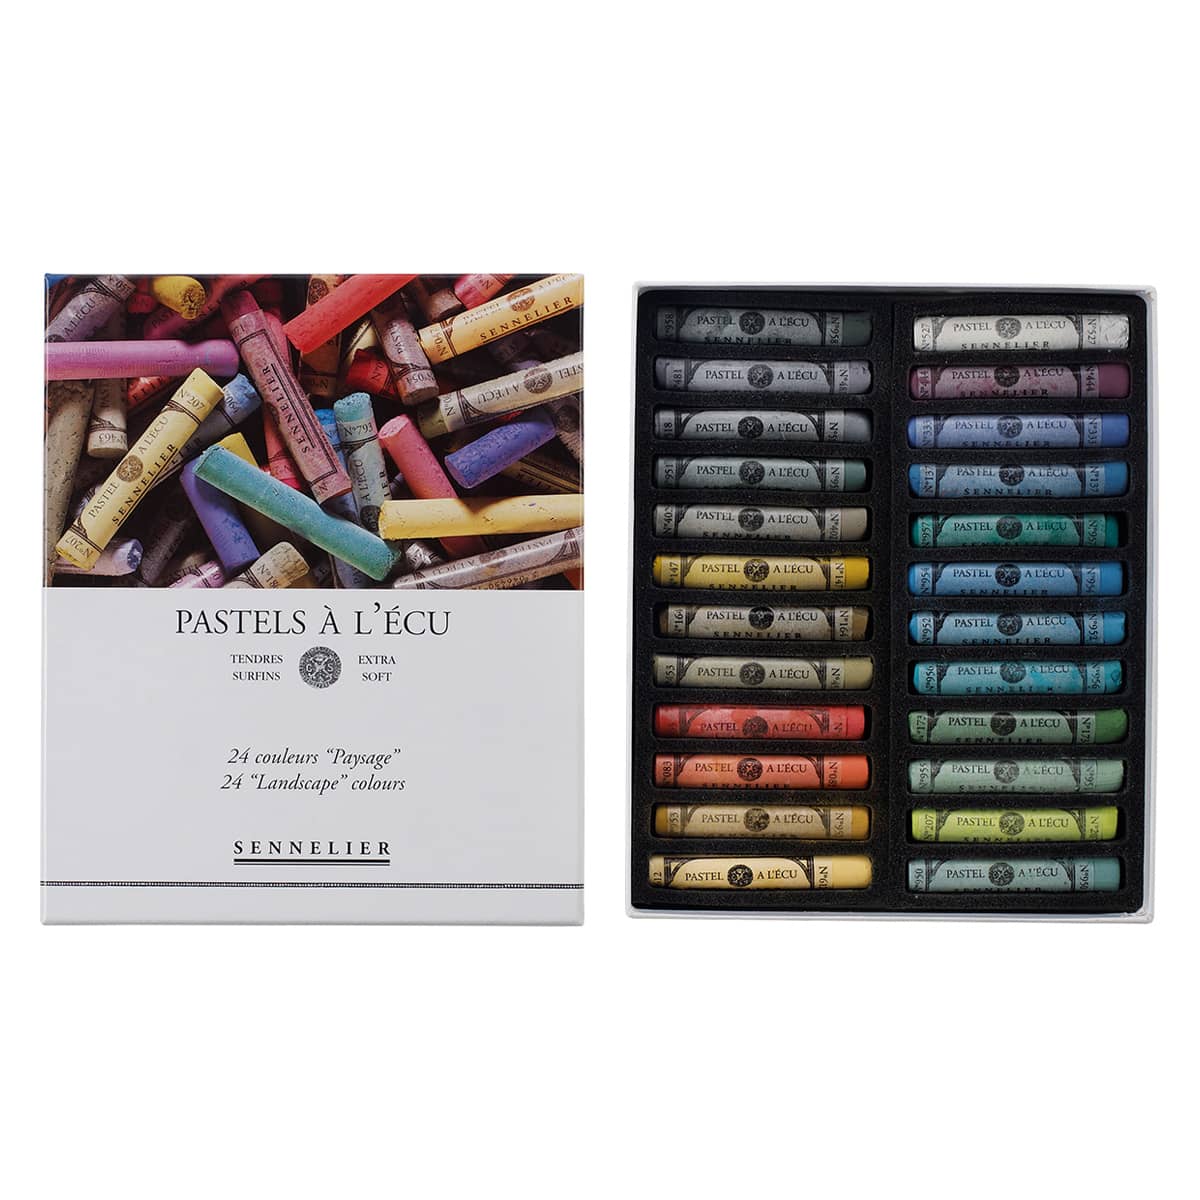 Sennelier Extra Soft Pastel Cardboard Box Set of 24 - Landscape Colors